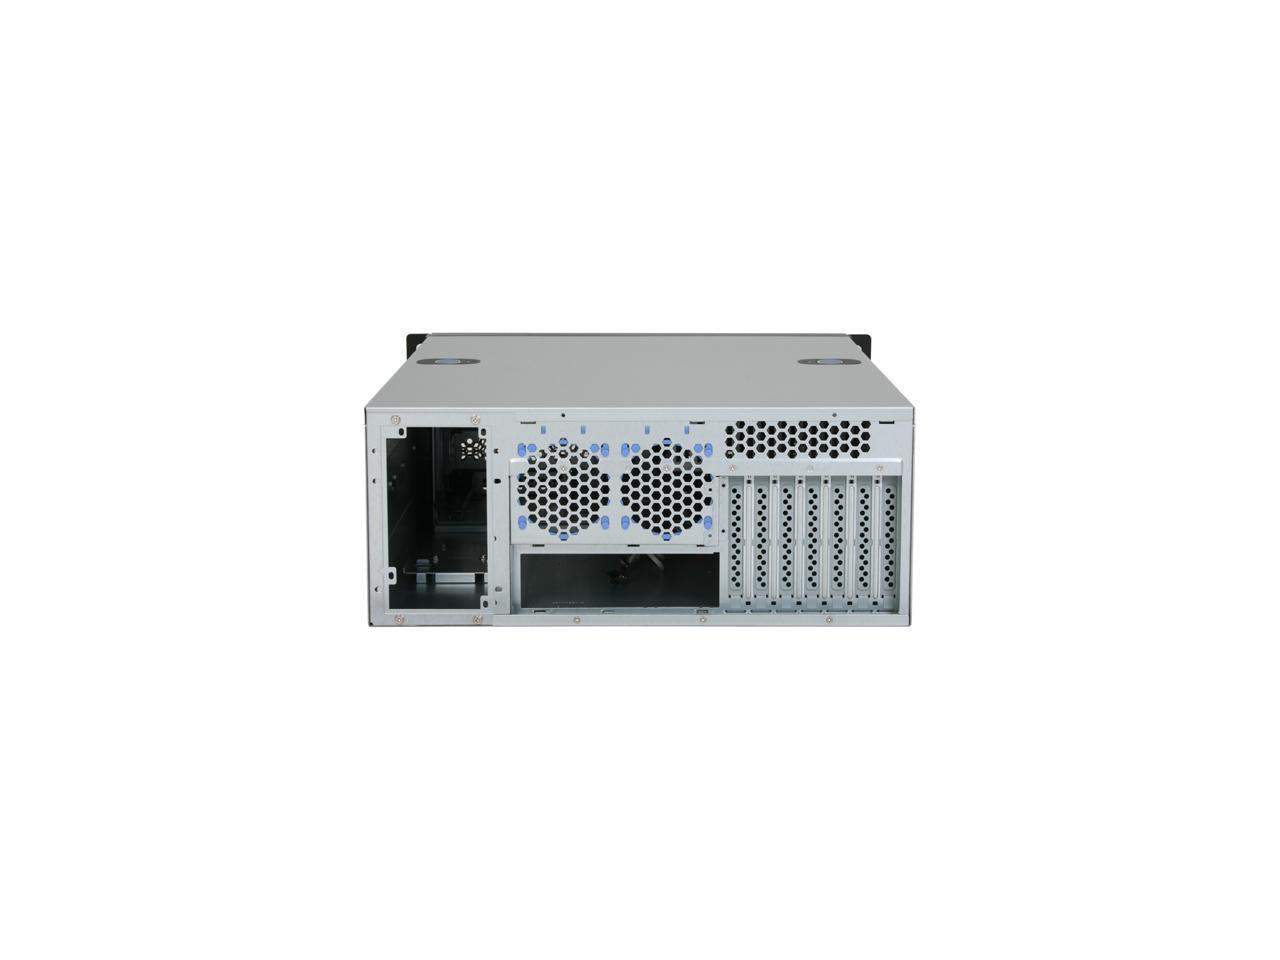 Chenbro Rm42200-1 1.2Mm Sgcc 4U Rackmount Feature-Advanced Industrial Server Chassis 3 External 5.25" Drive Bays